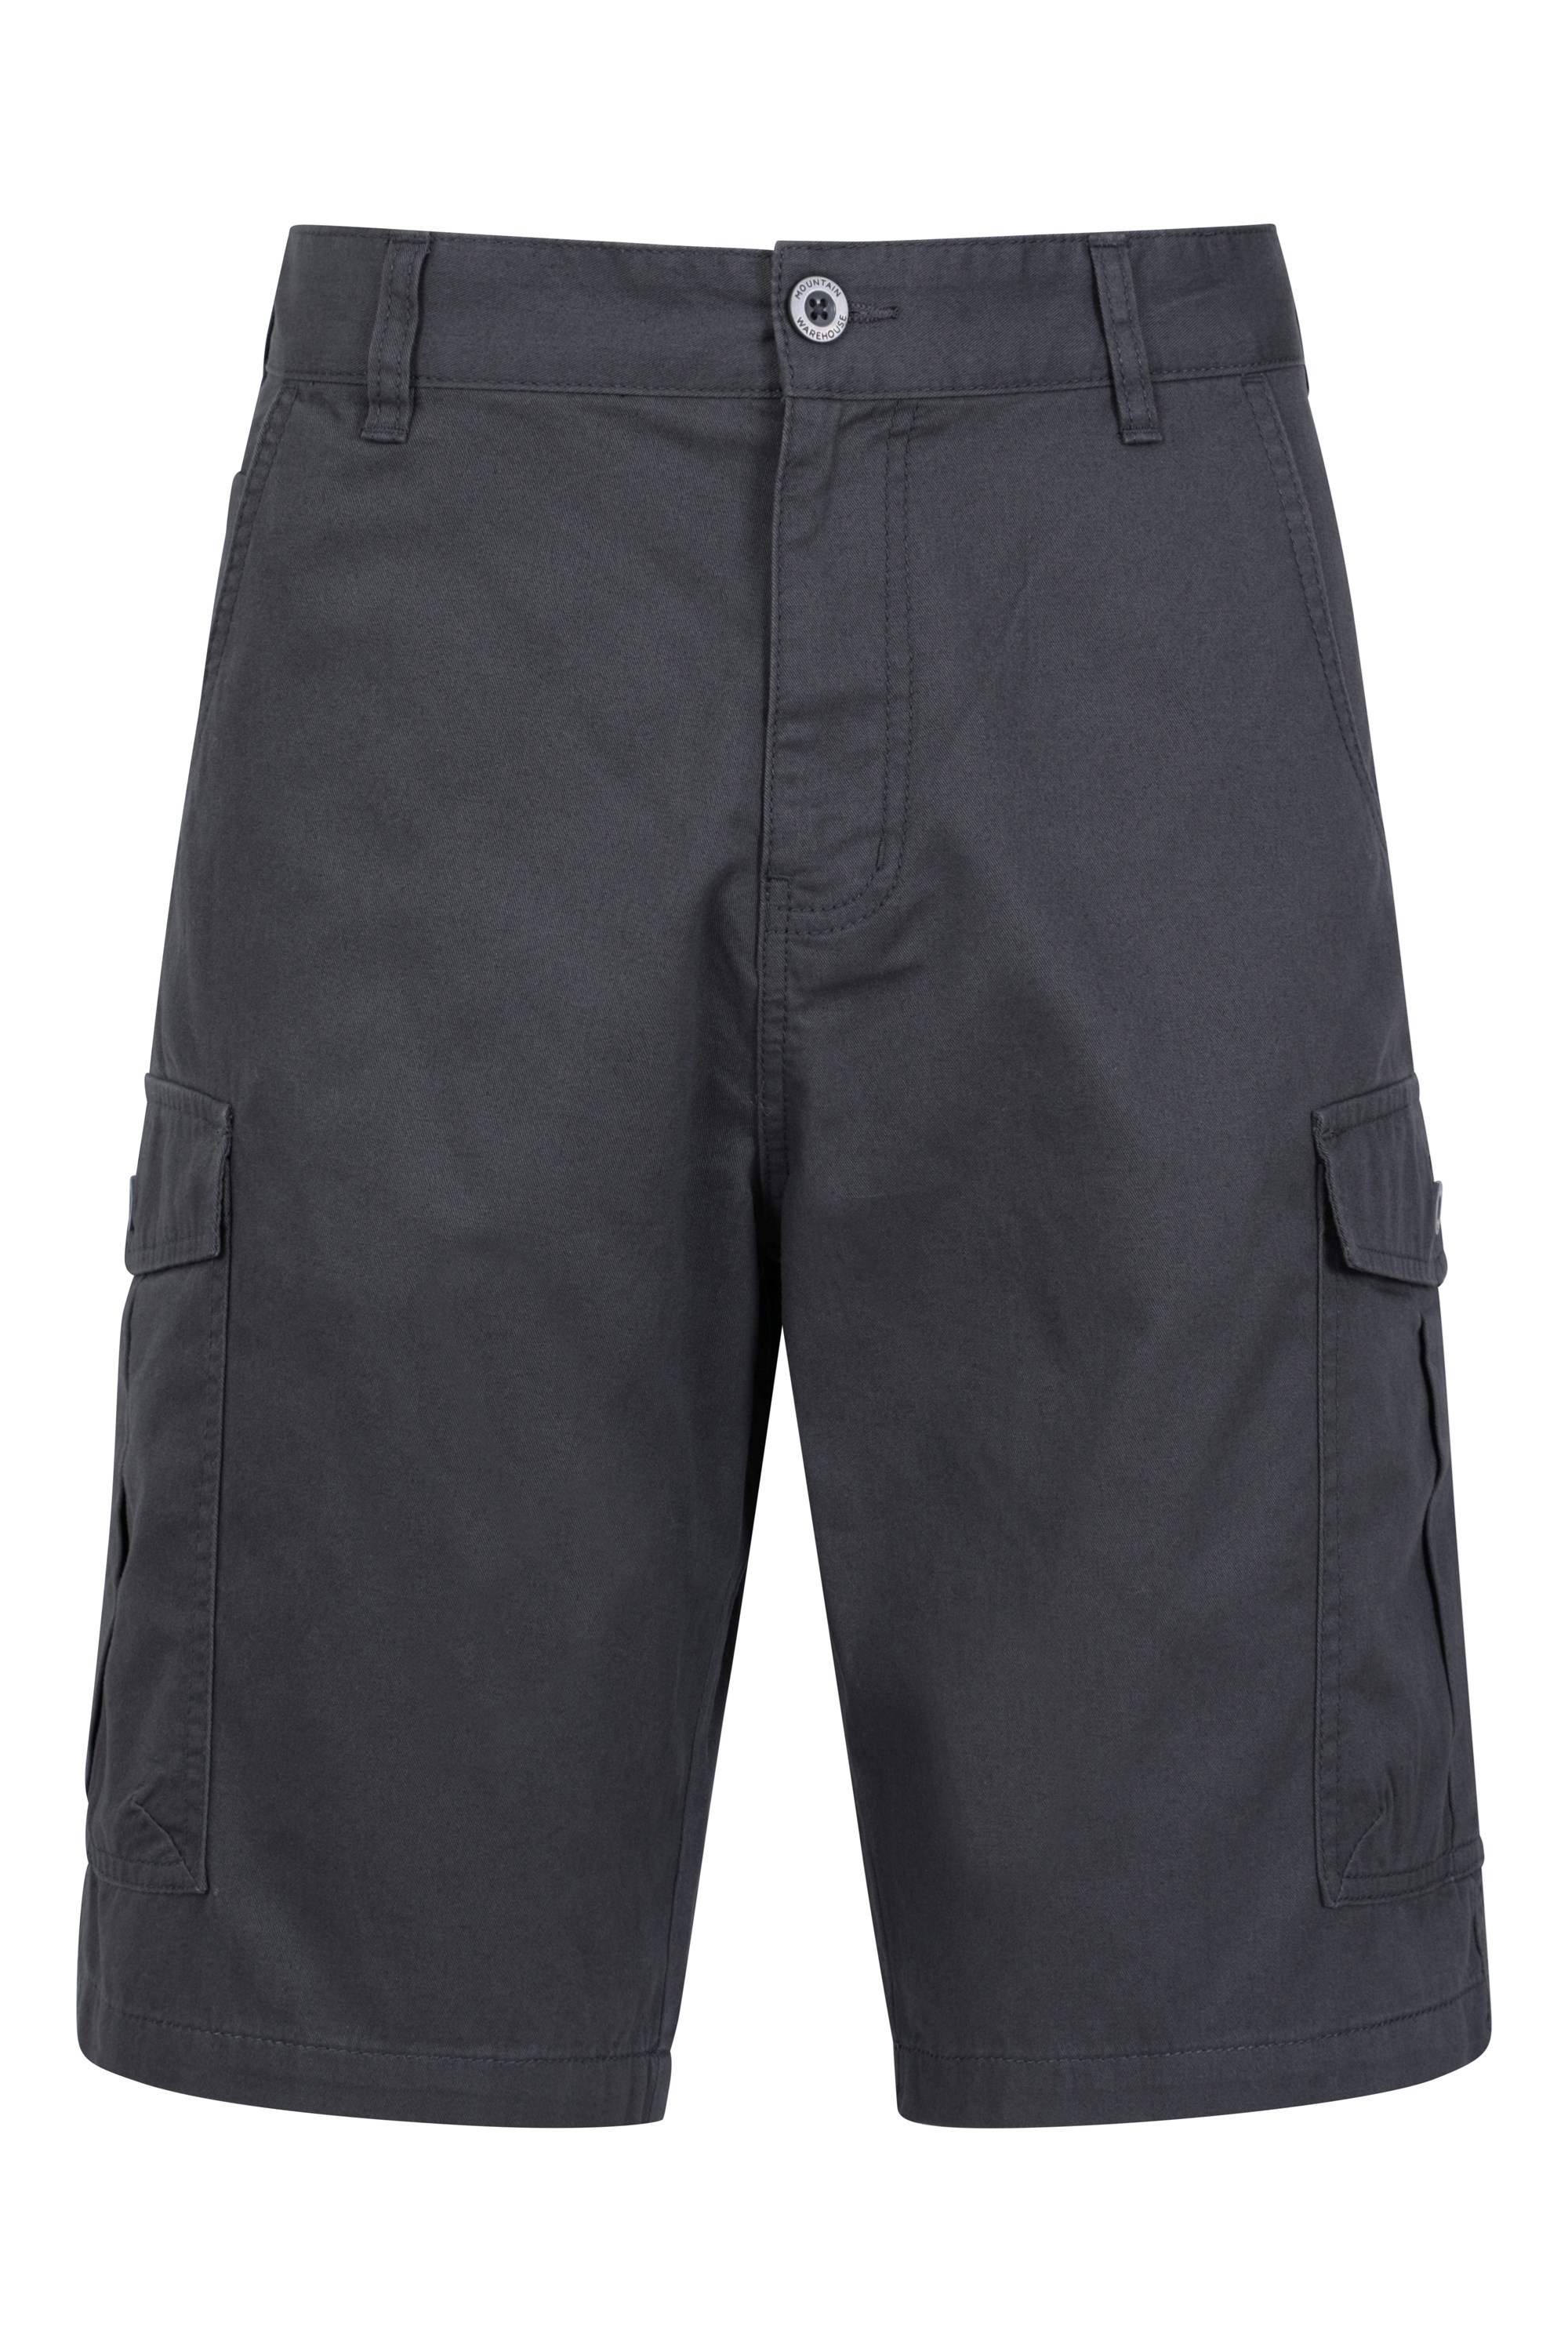 Lakeside Mens Cargo Shorts - Grey